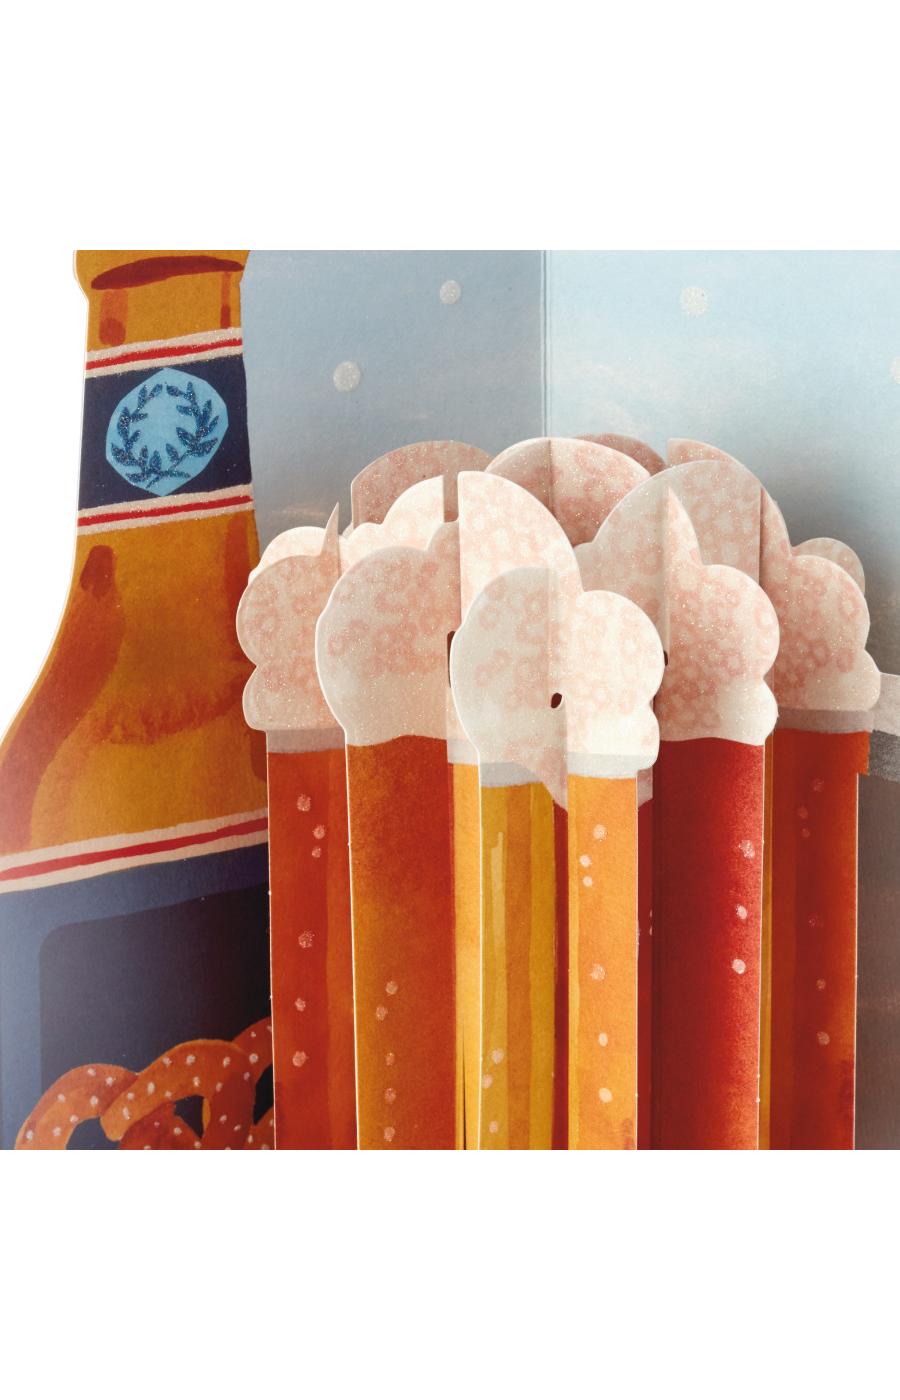 Hallmark Paper Wonder Beer Displayable Pop Up Birthday Card - E37; image 4 of 7